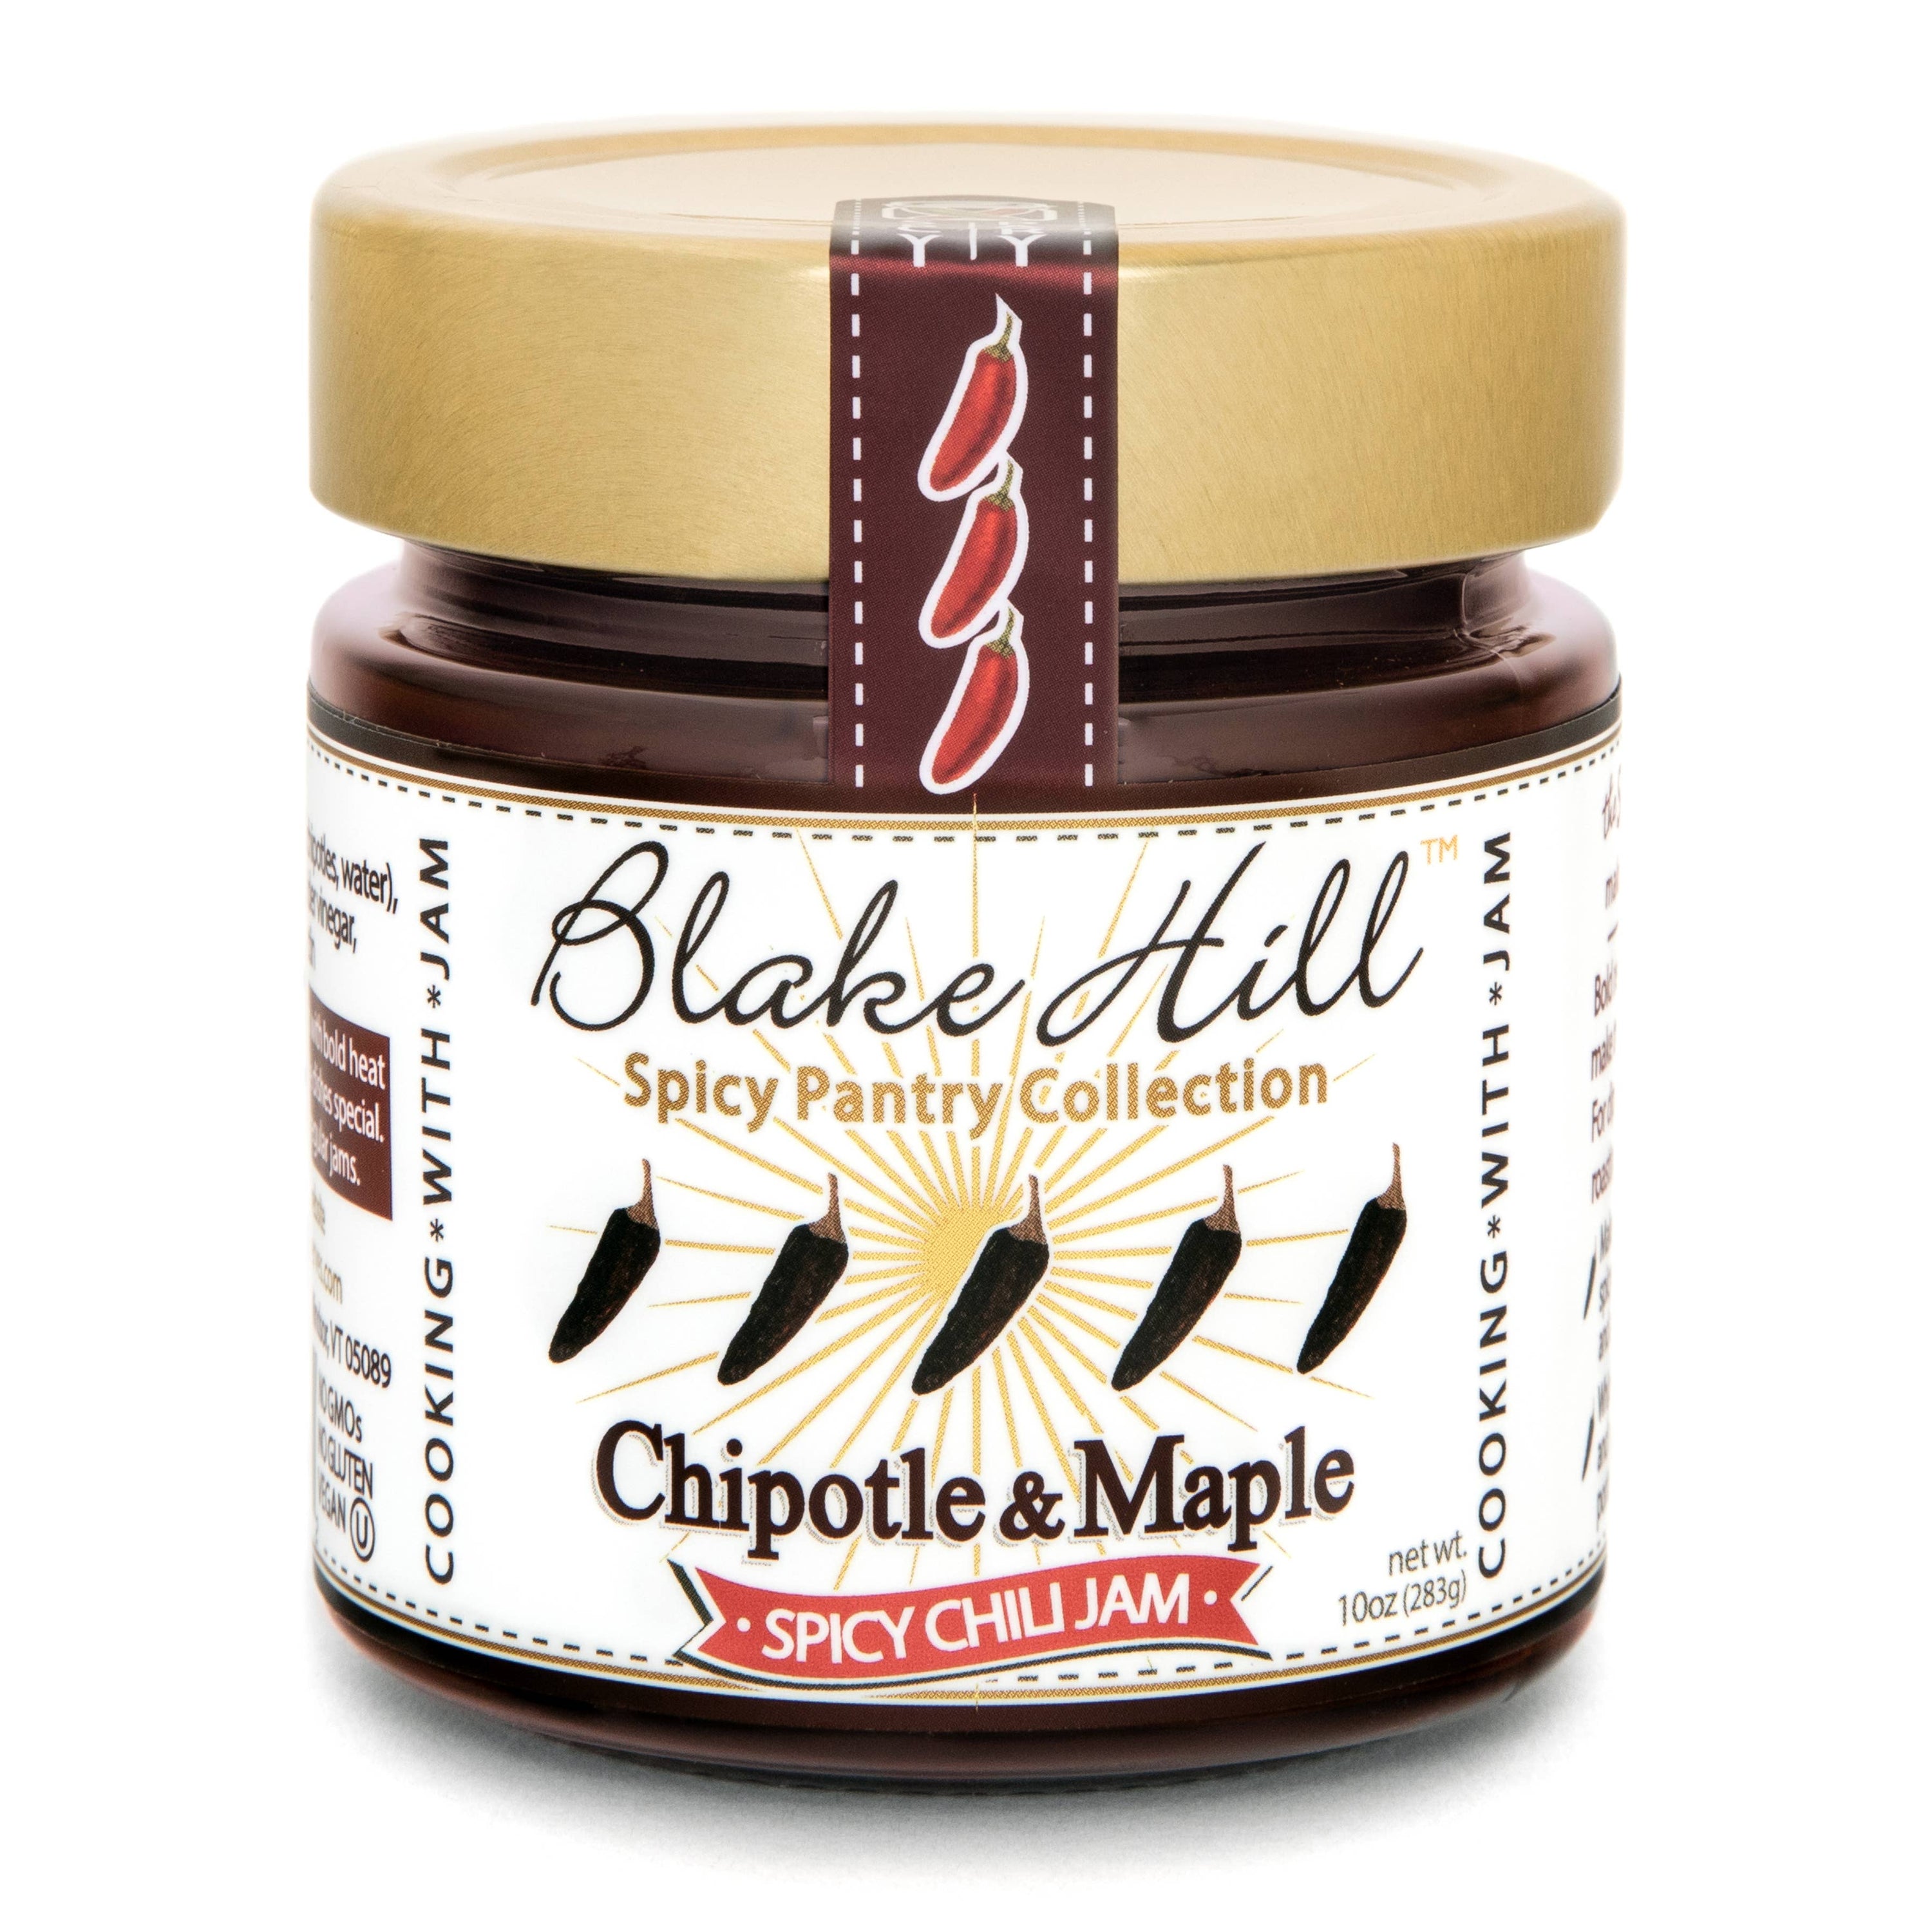 Blake Hill Preserves - Chipotle & Maple Spicy Chili Jam